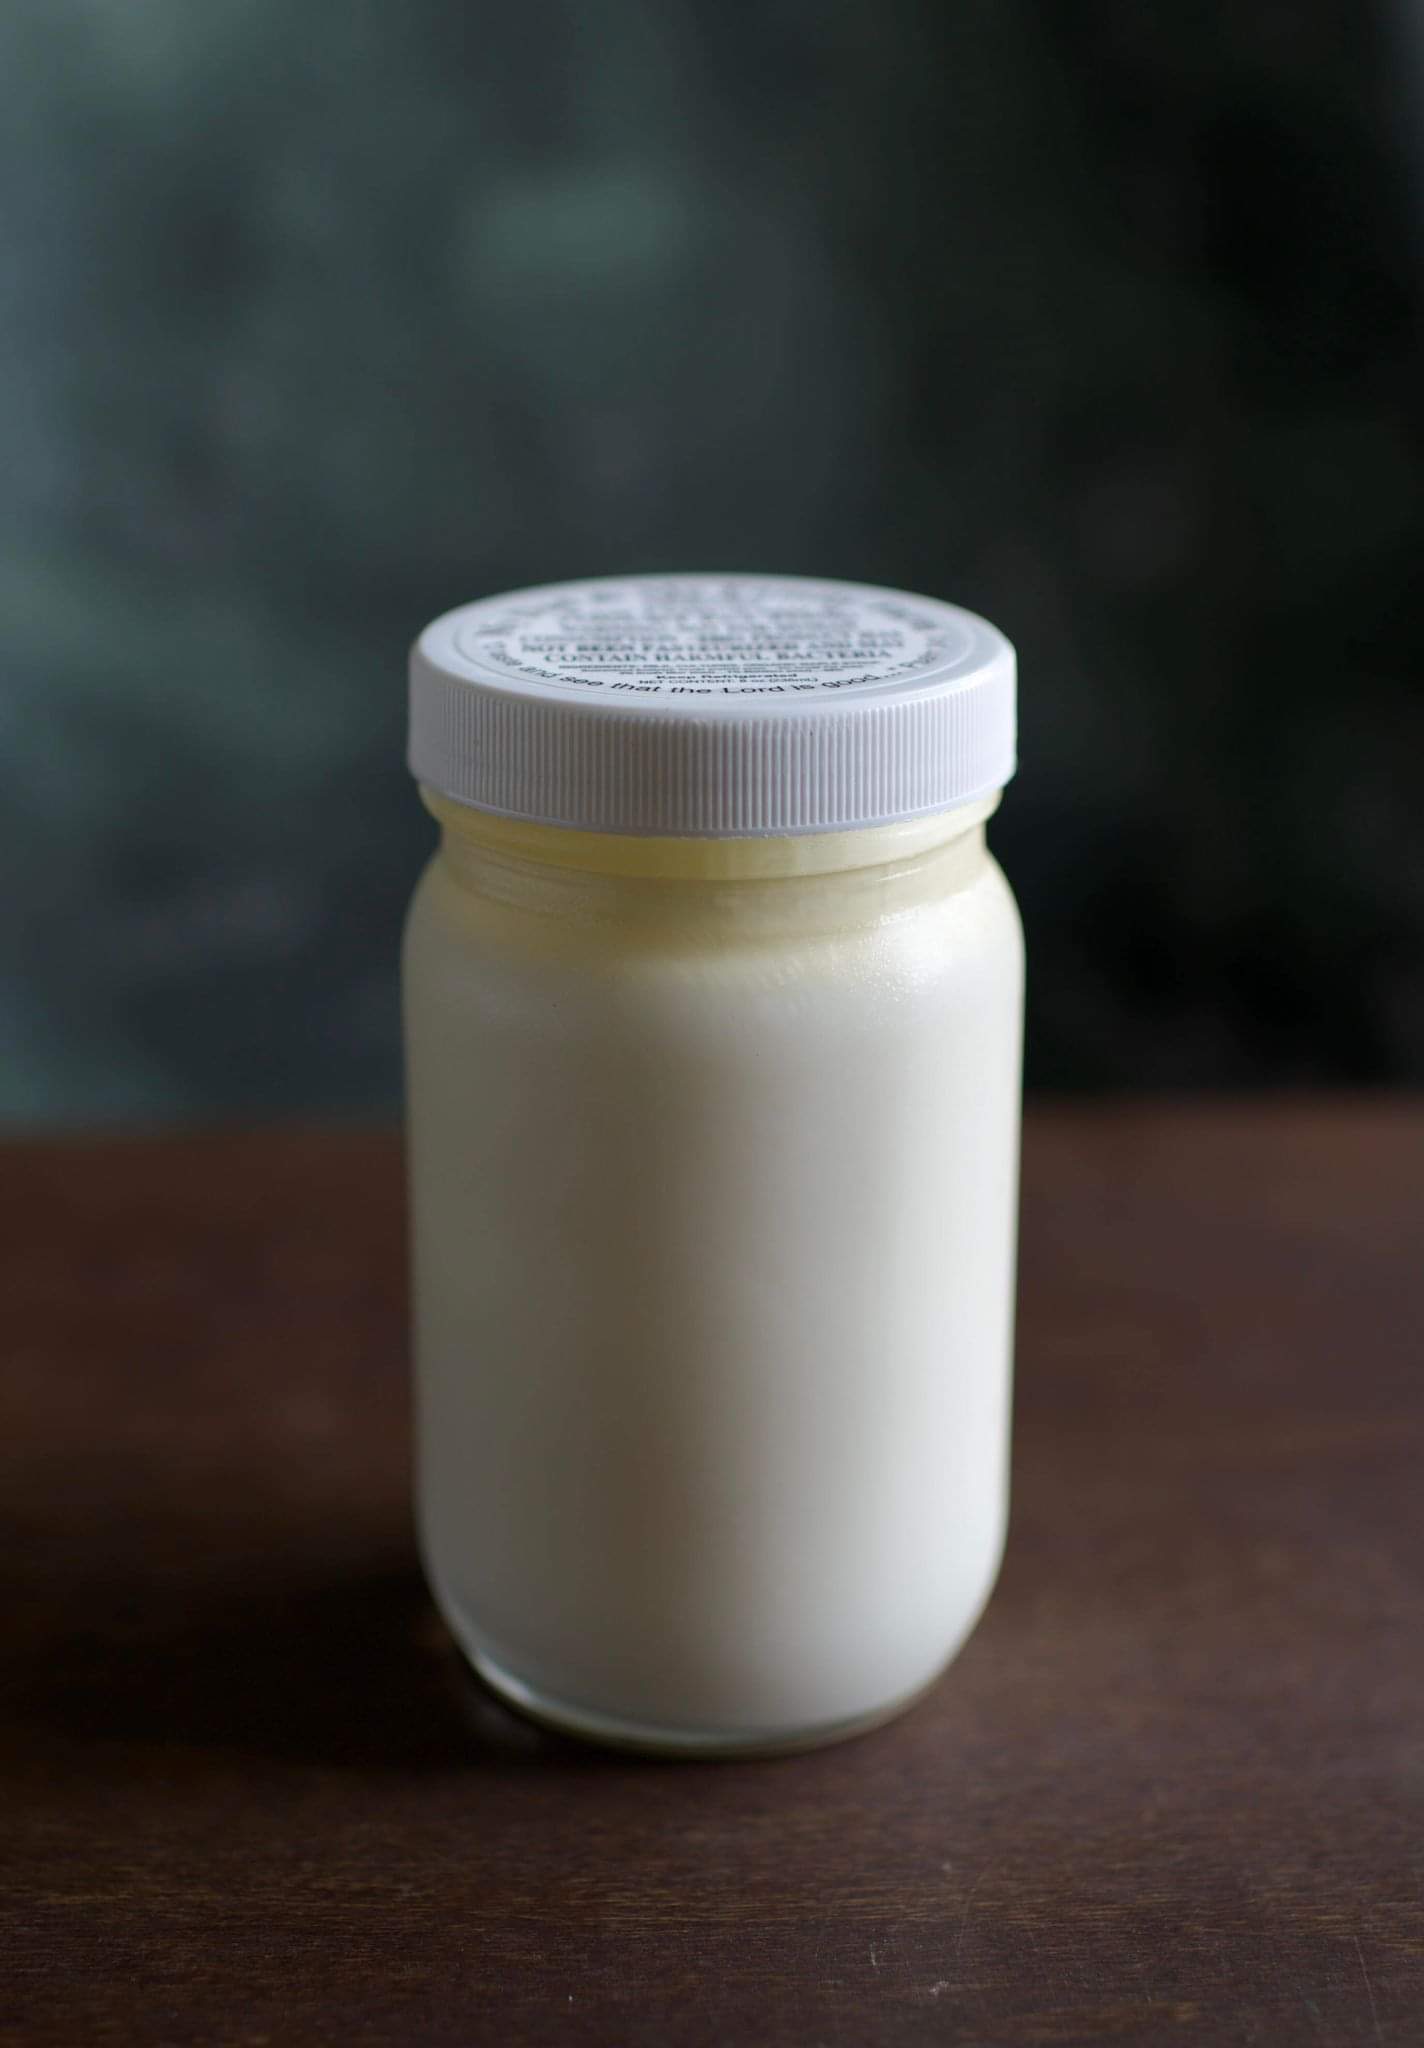 100% Grass-Fed Raw Milk Yogurt (8 oz)